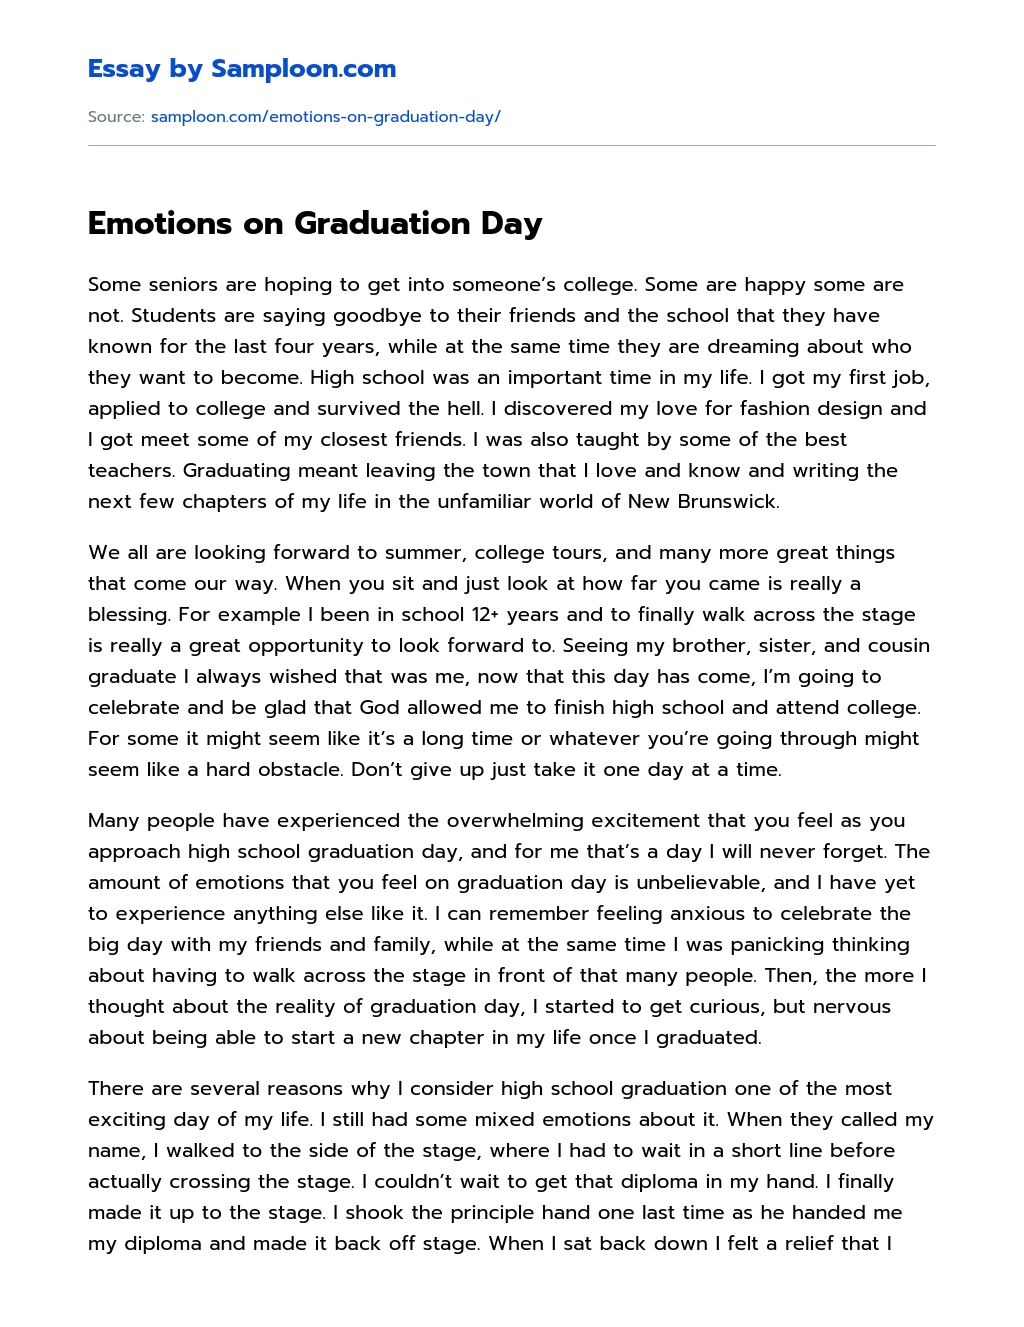 Emotions on Graduation Day essay